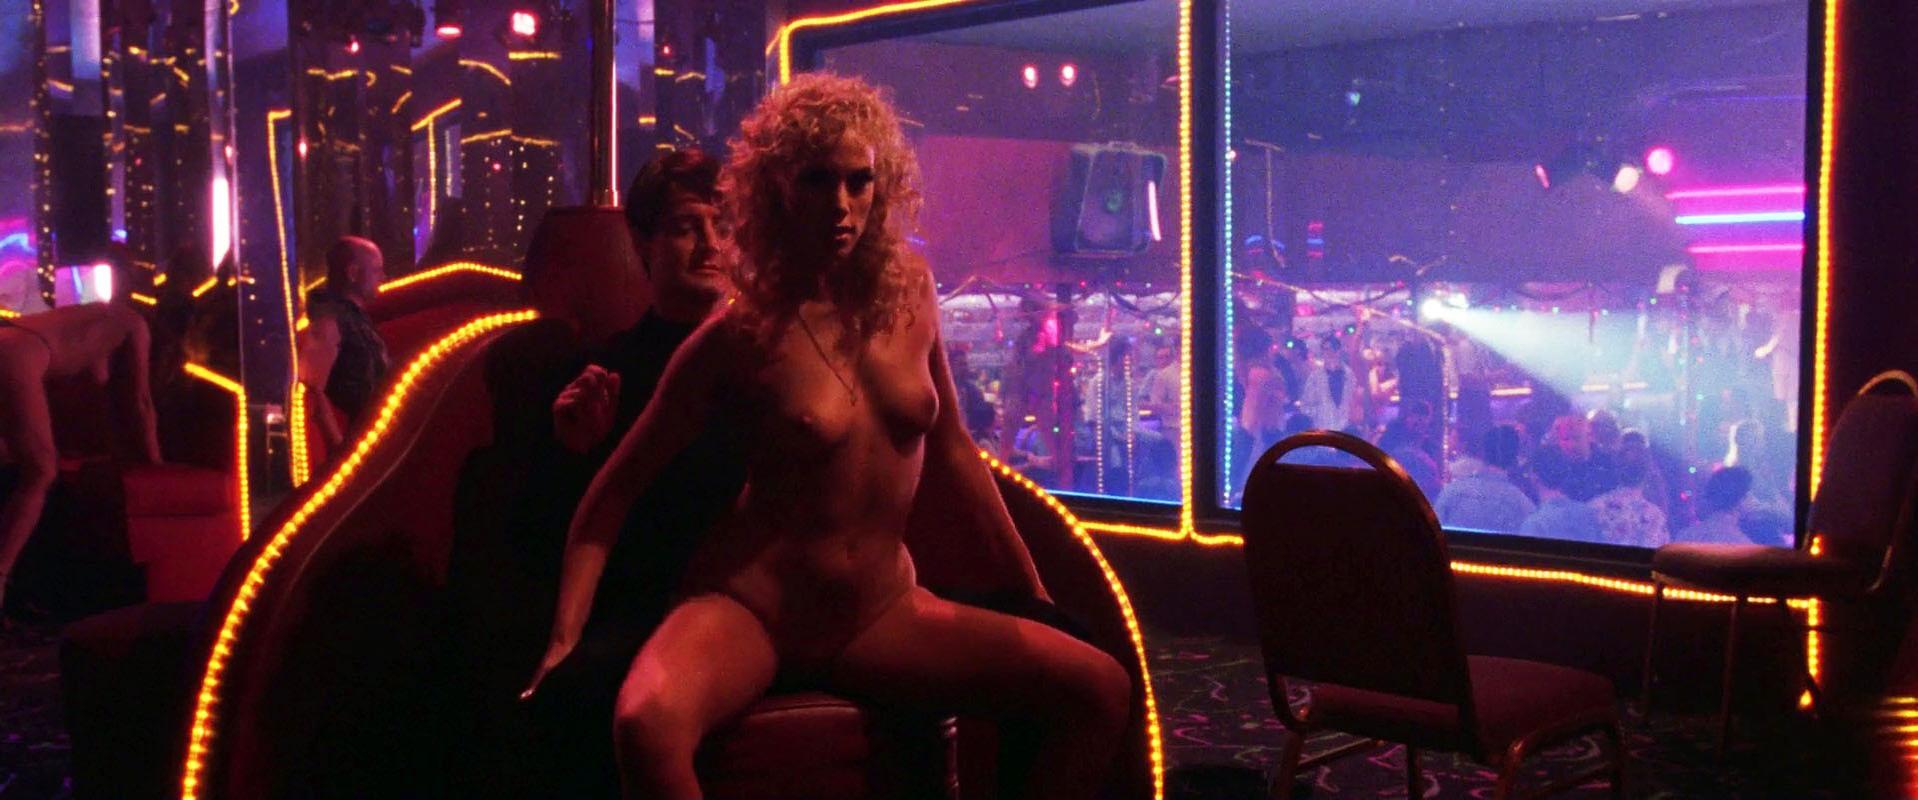 Elizabeth Berkley nude - Showgirls (1995) .